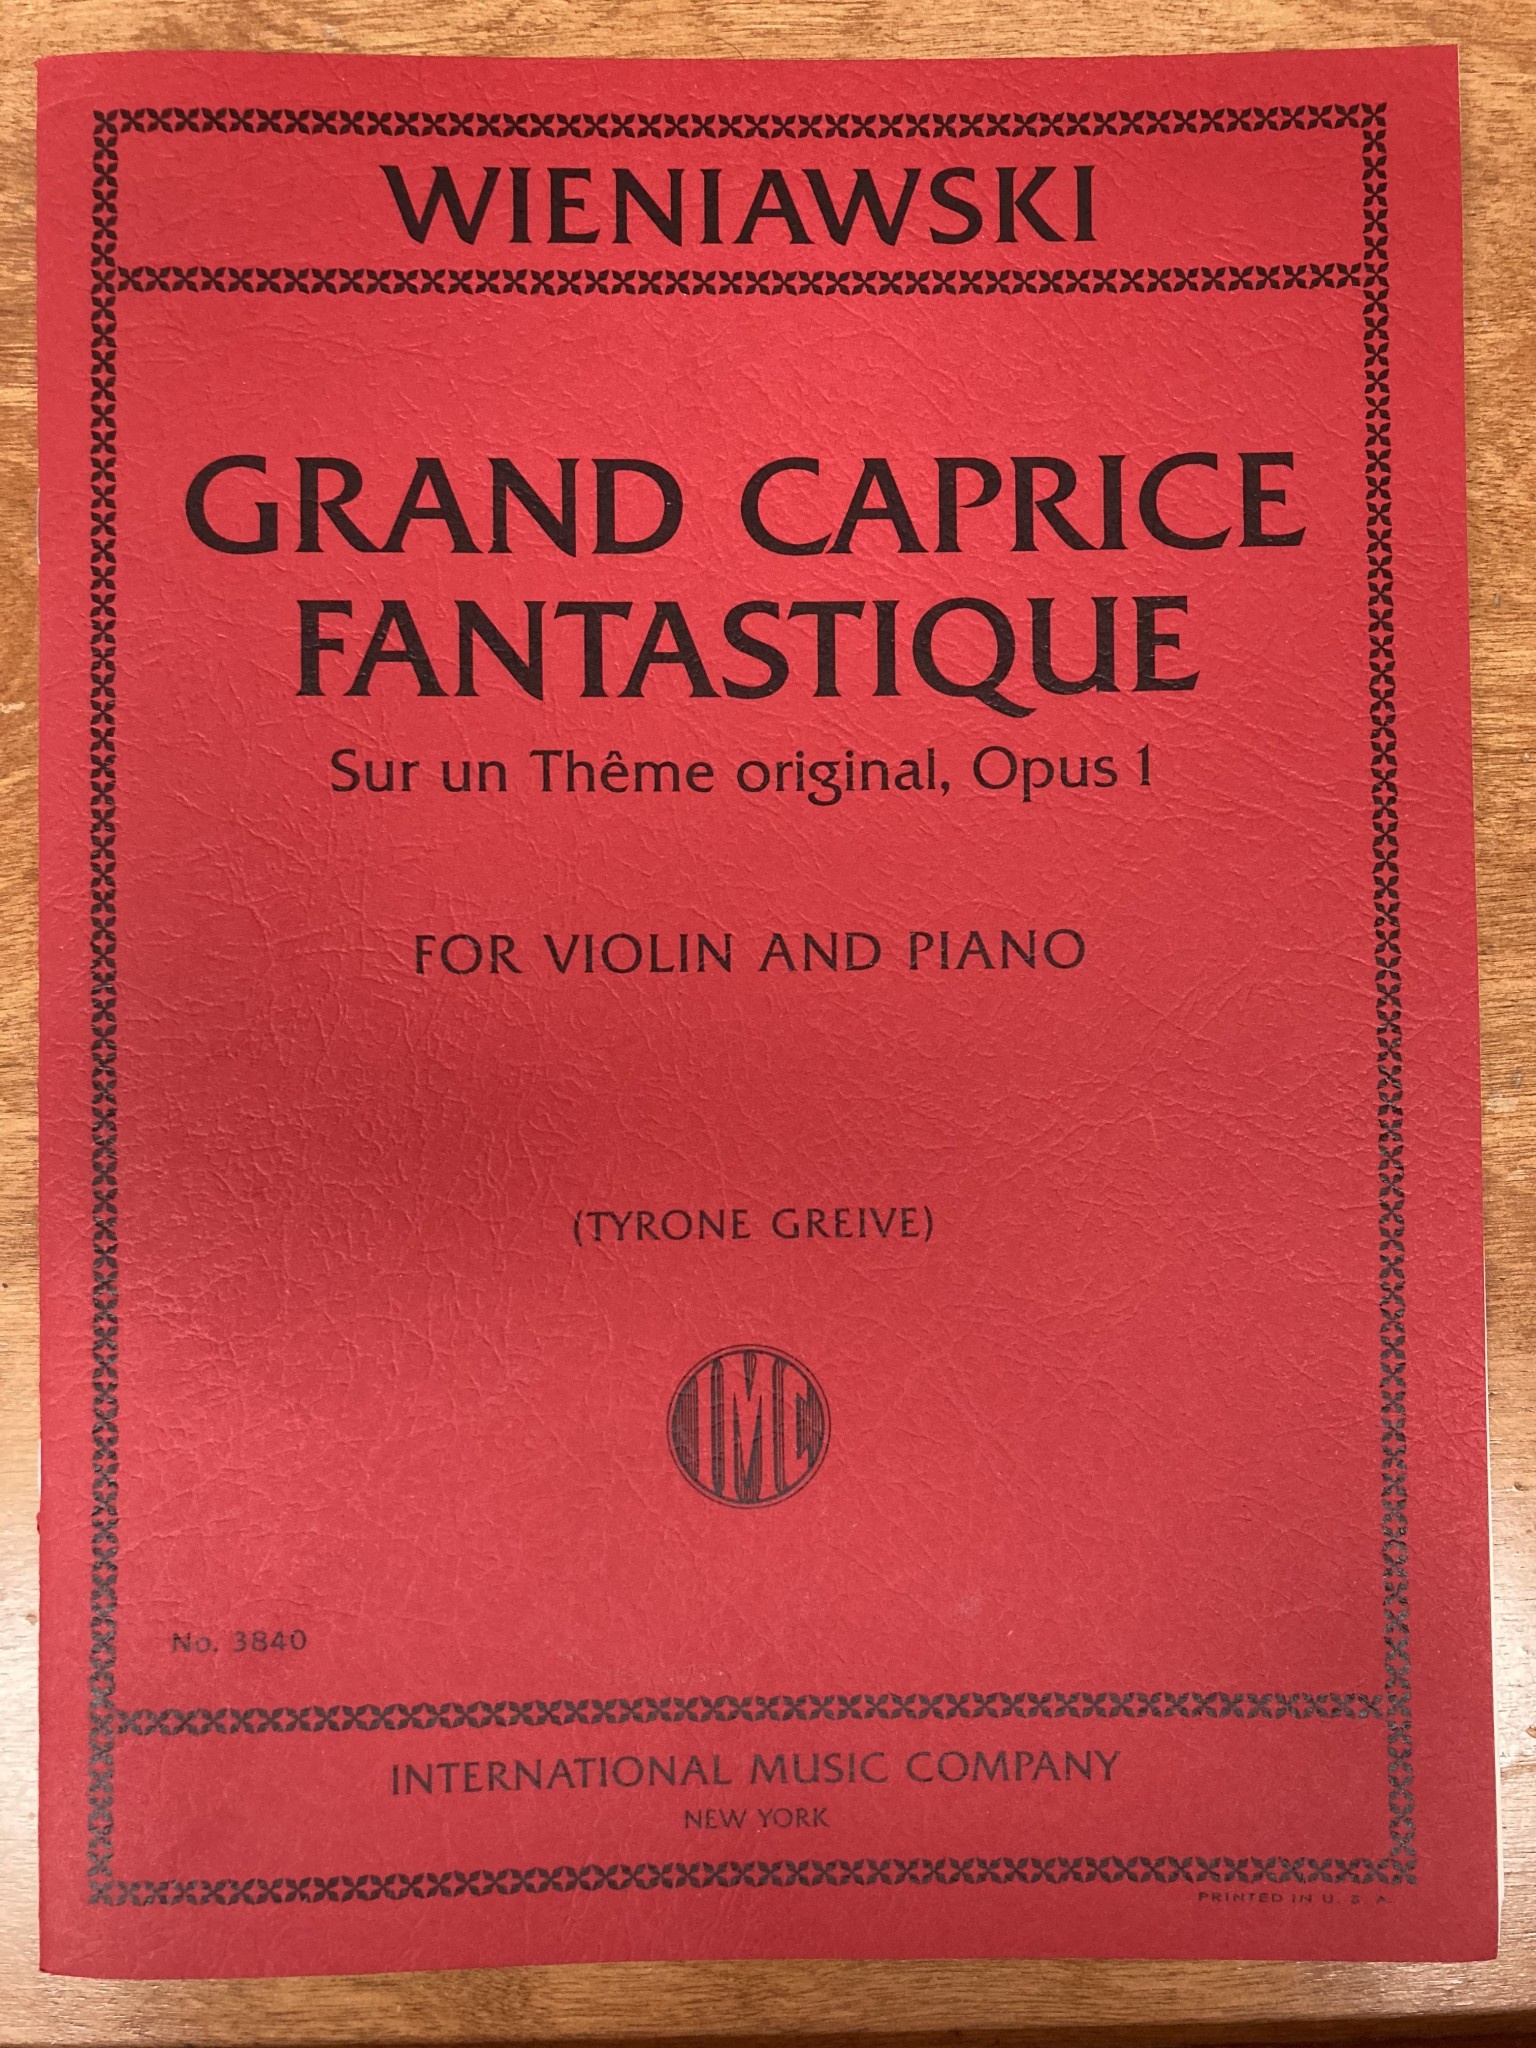 International Music Company Wieniawski (Grieve): Grand Caprice Fantastique - Sur un Theme original, Opus 1 (violin and piano) IMC